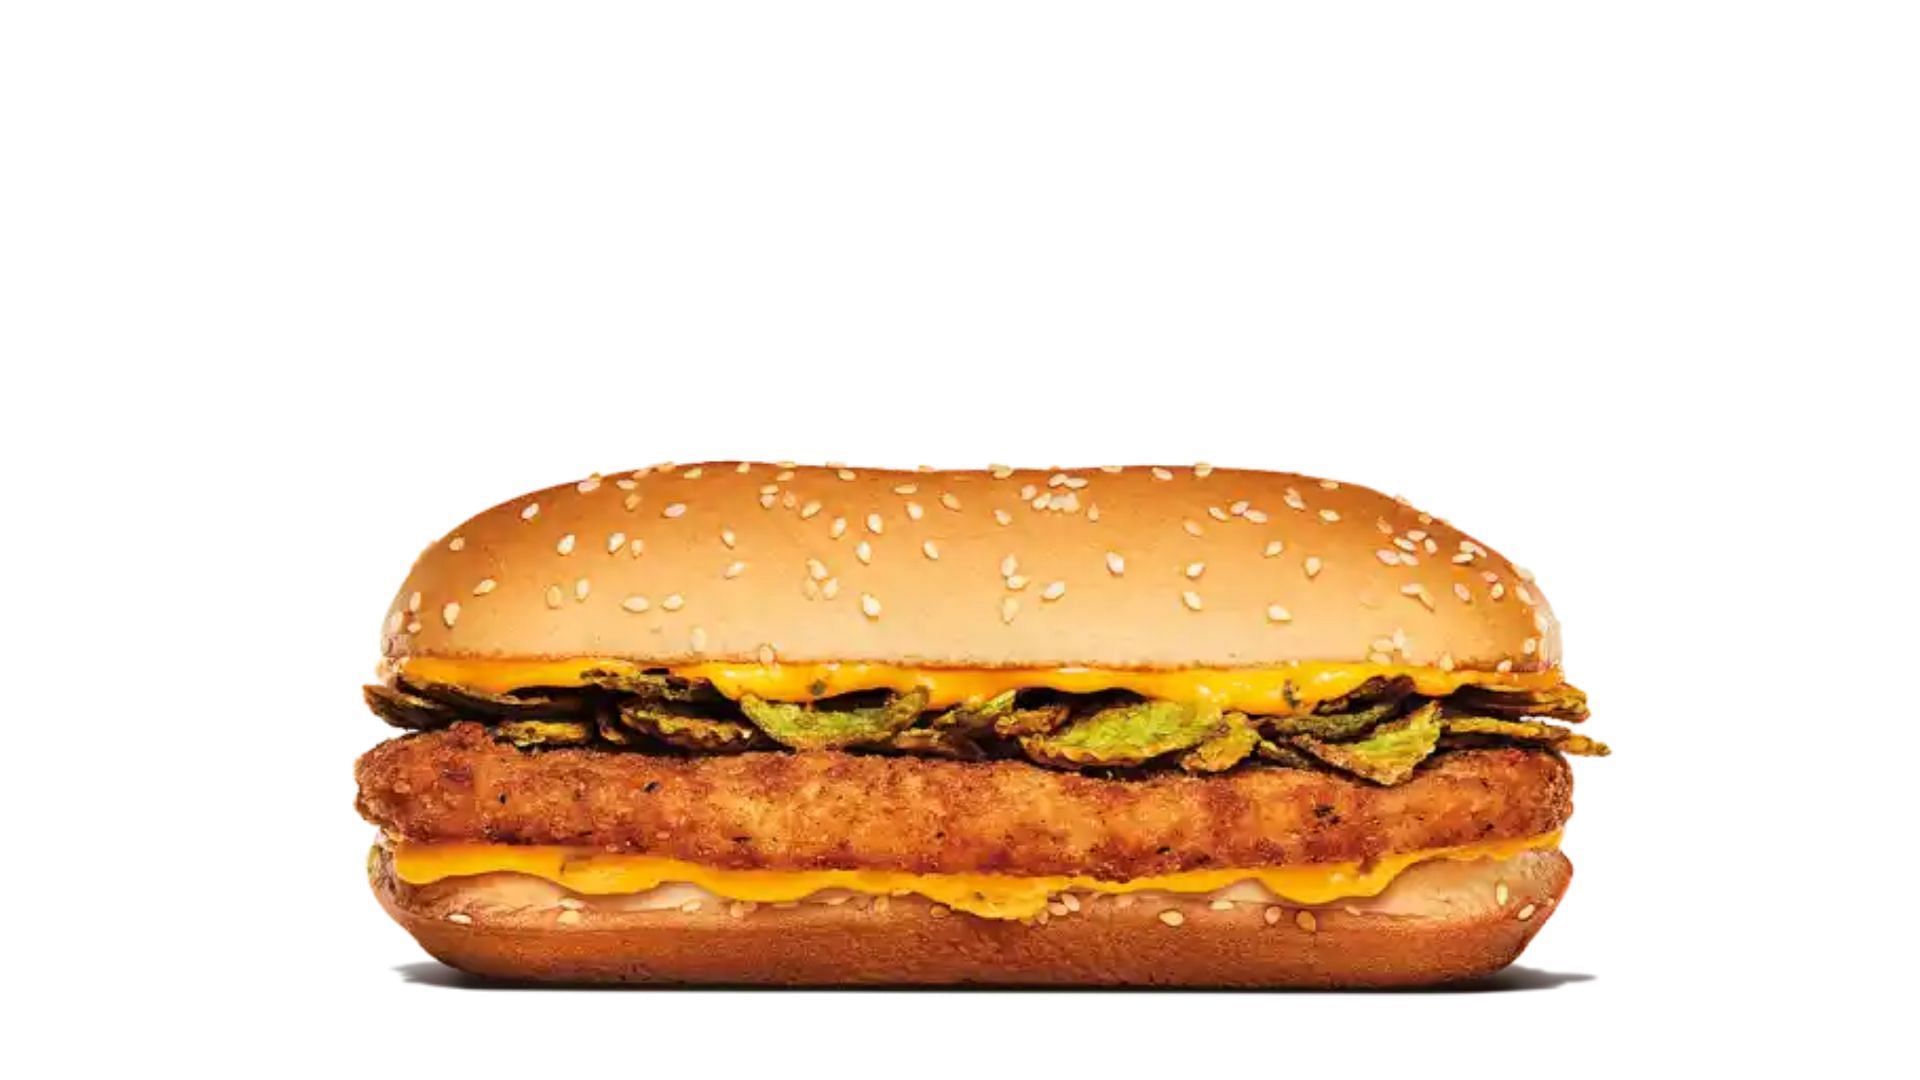 The new Mexican International Original Chicken Sandwich (Image via Burger King)